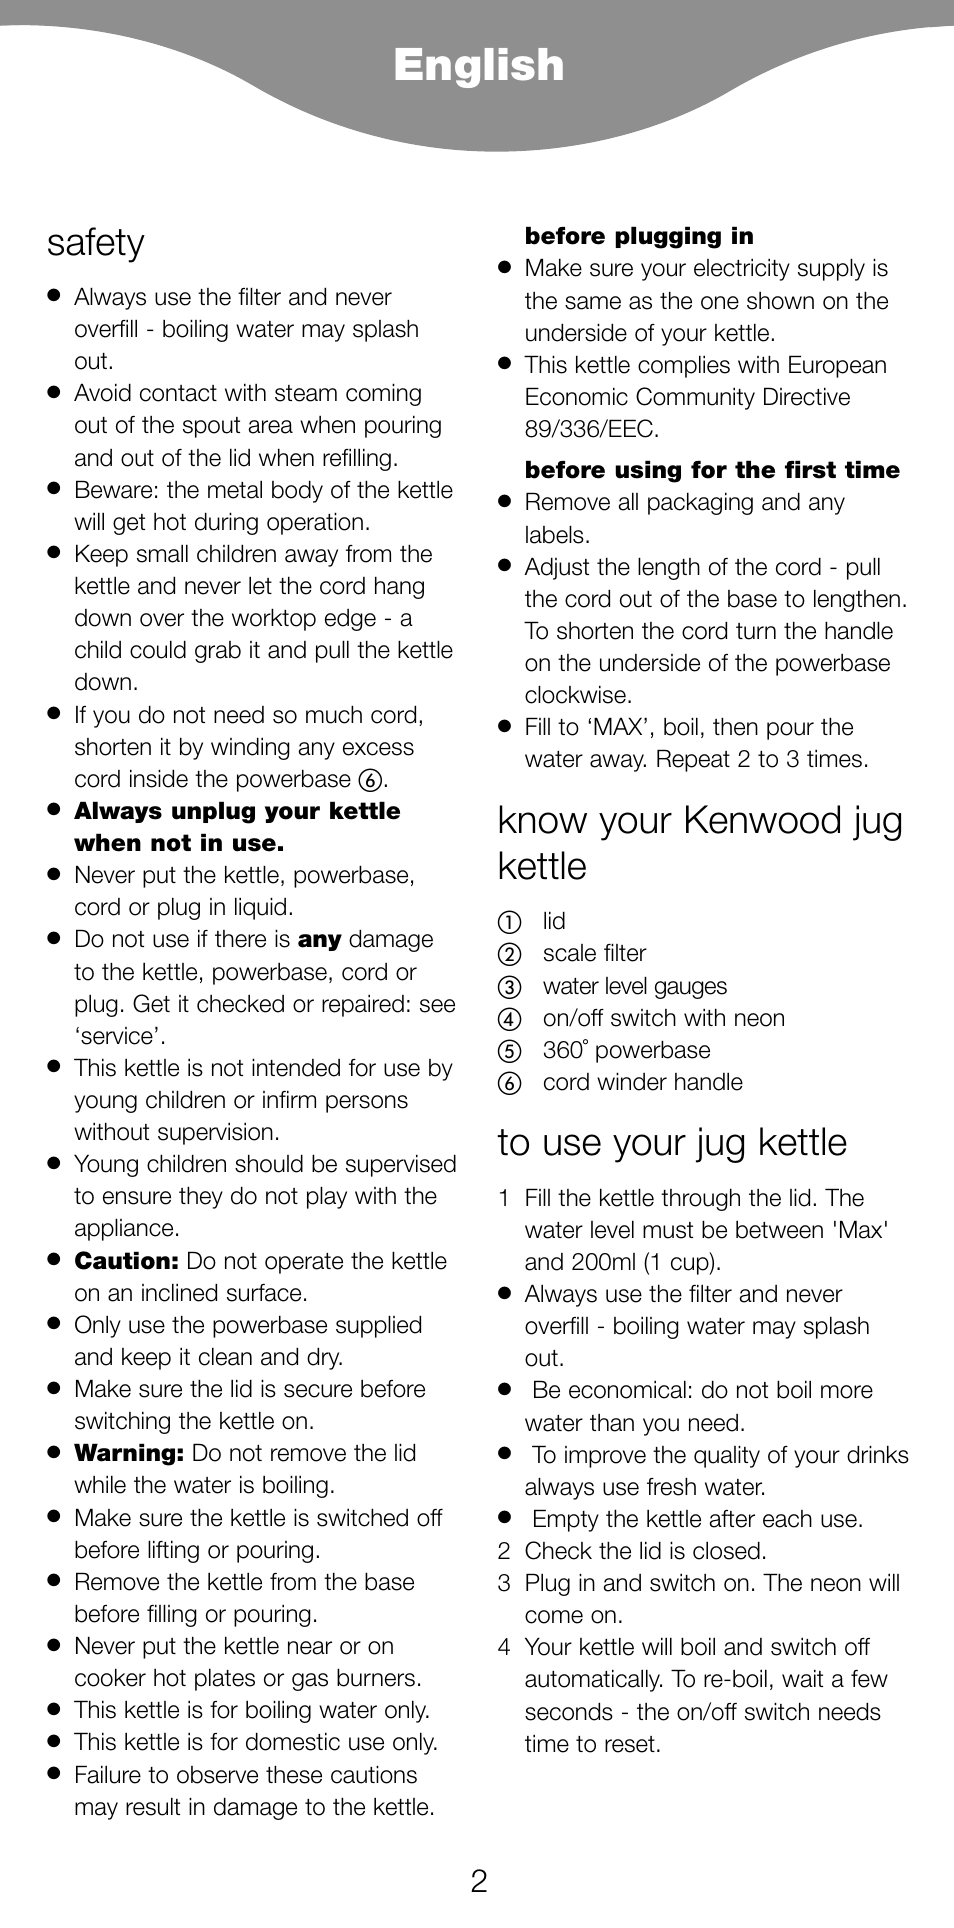 English, Safety, Know your kenwood jug kettle | Kenwood SJ900 User Manual | Page 5 / 48